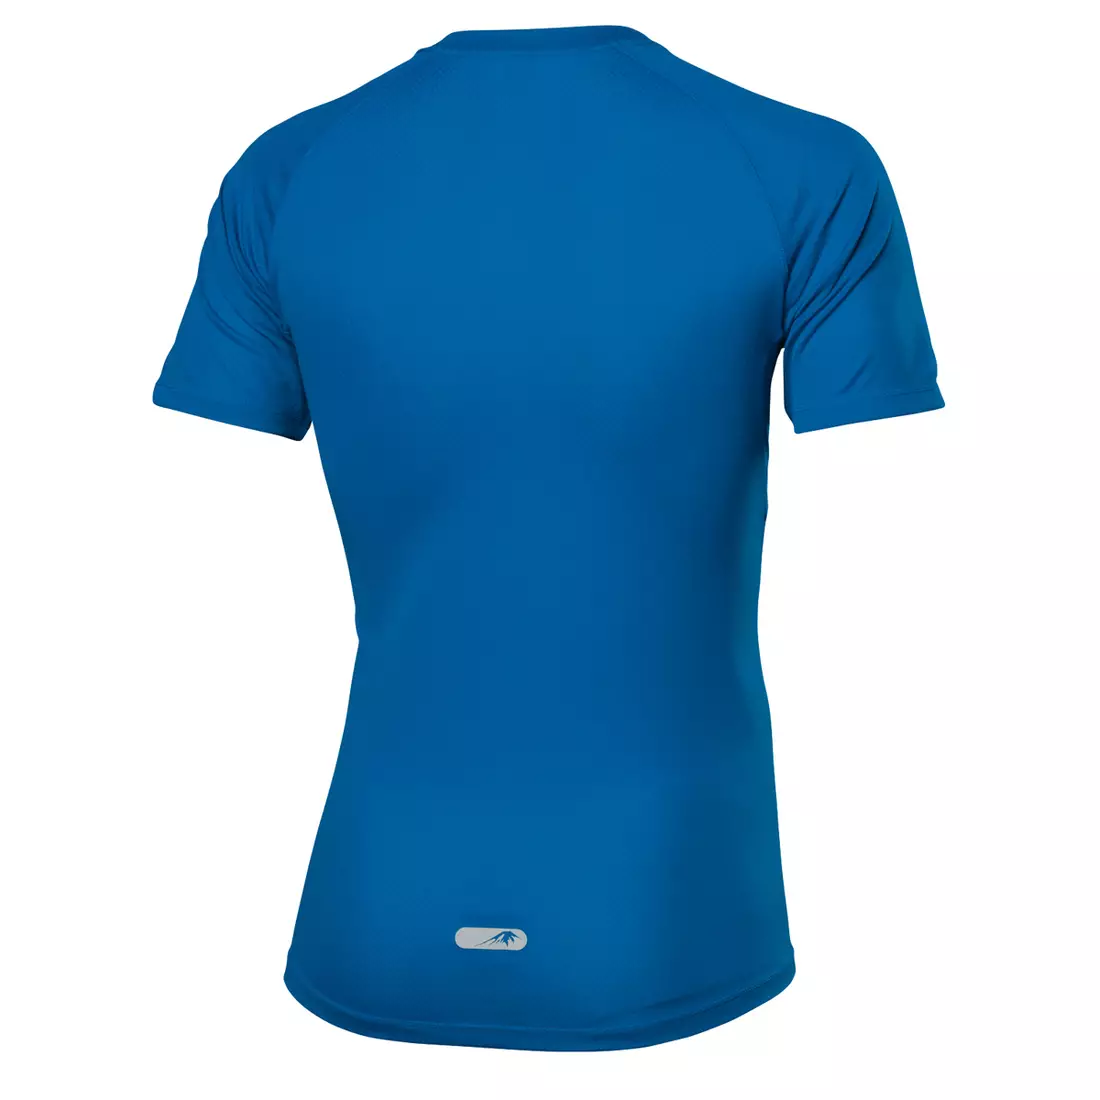 ASICS 110551-0861 FUJI GRAPHIC TOP – Herren-Lauf-T-Shirt, Farbe: Blau